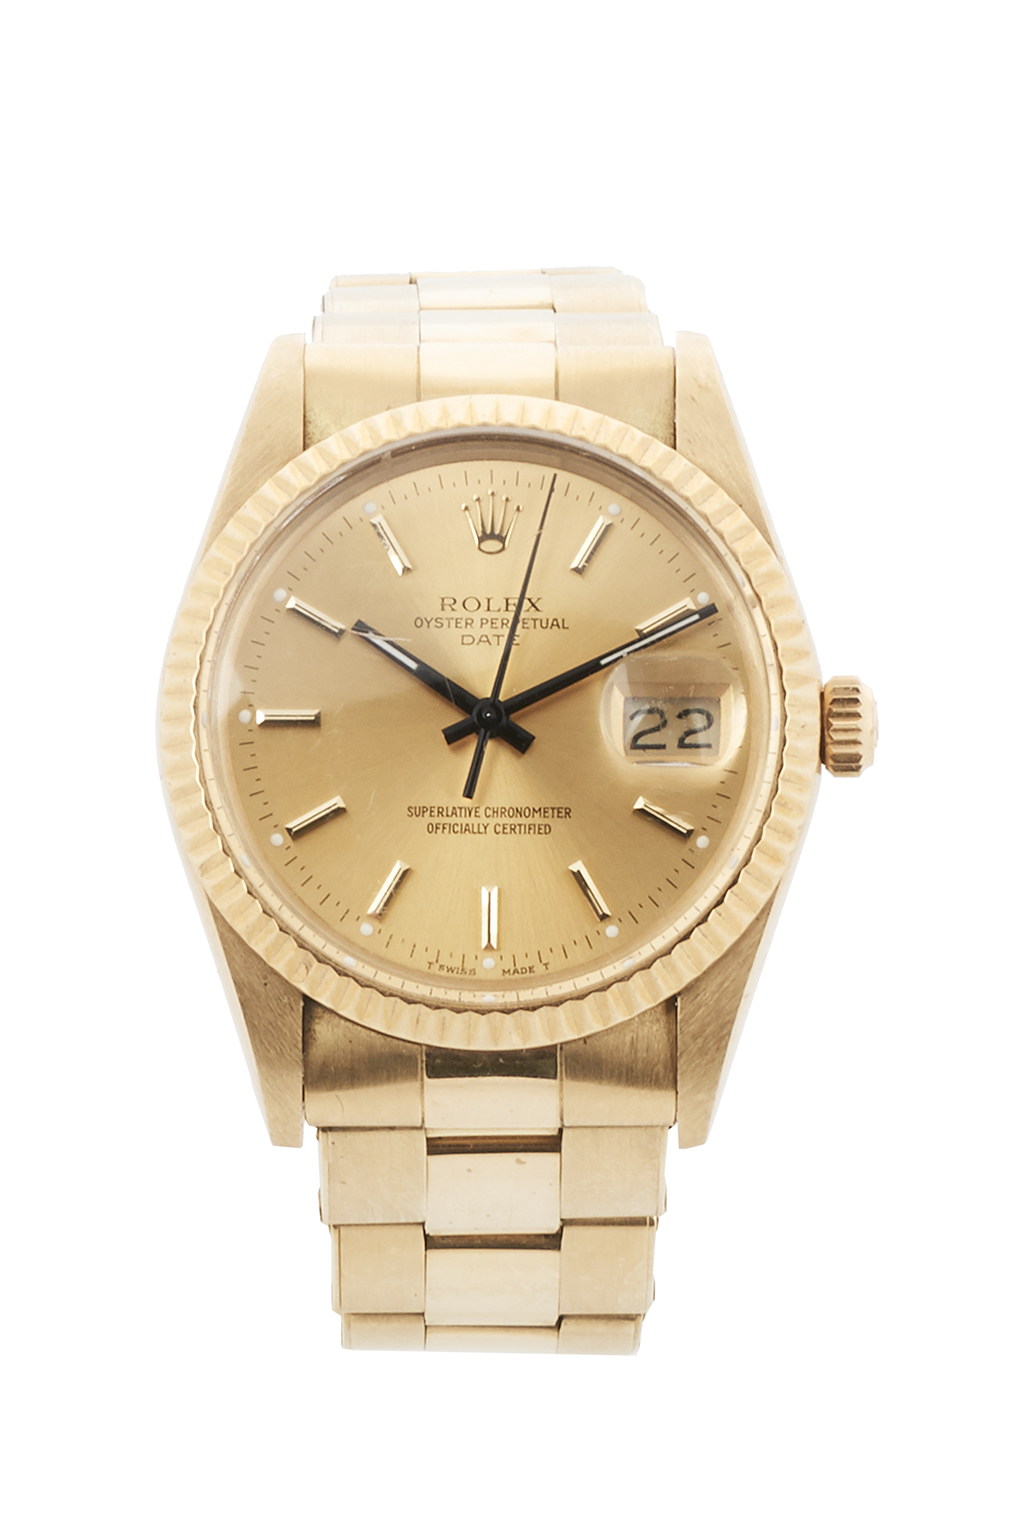 Rolex Gentleman’s 1989 Gold Date Watch